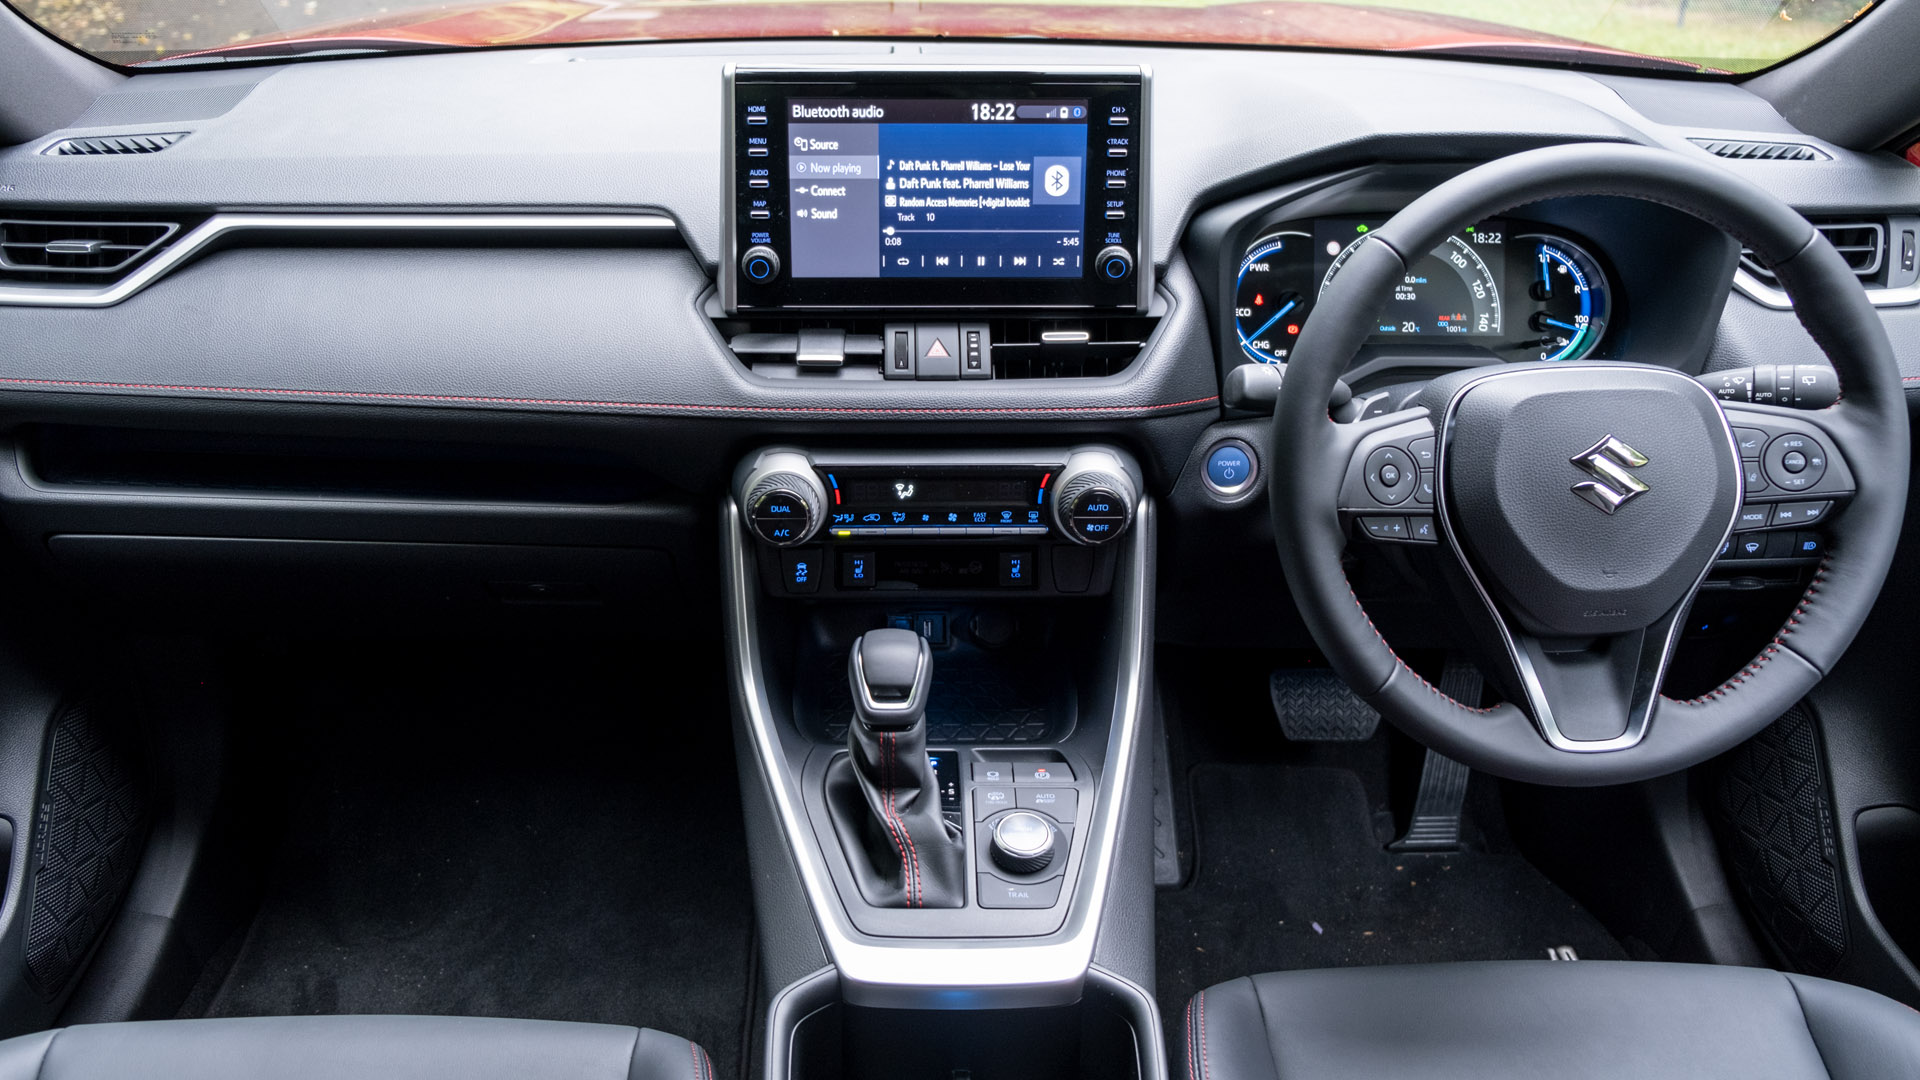 Suzuki Across interior space